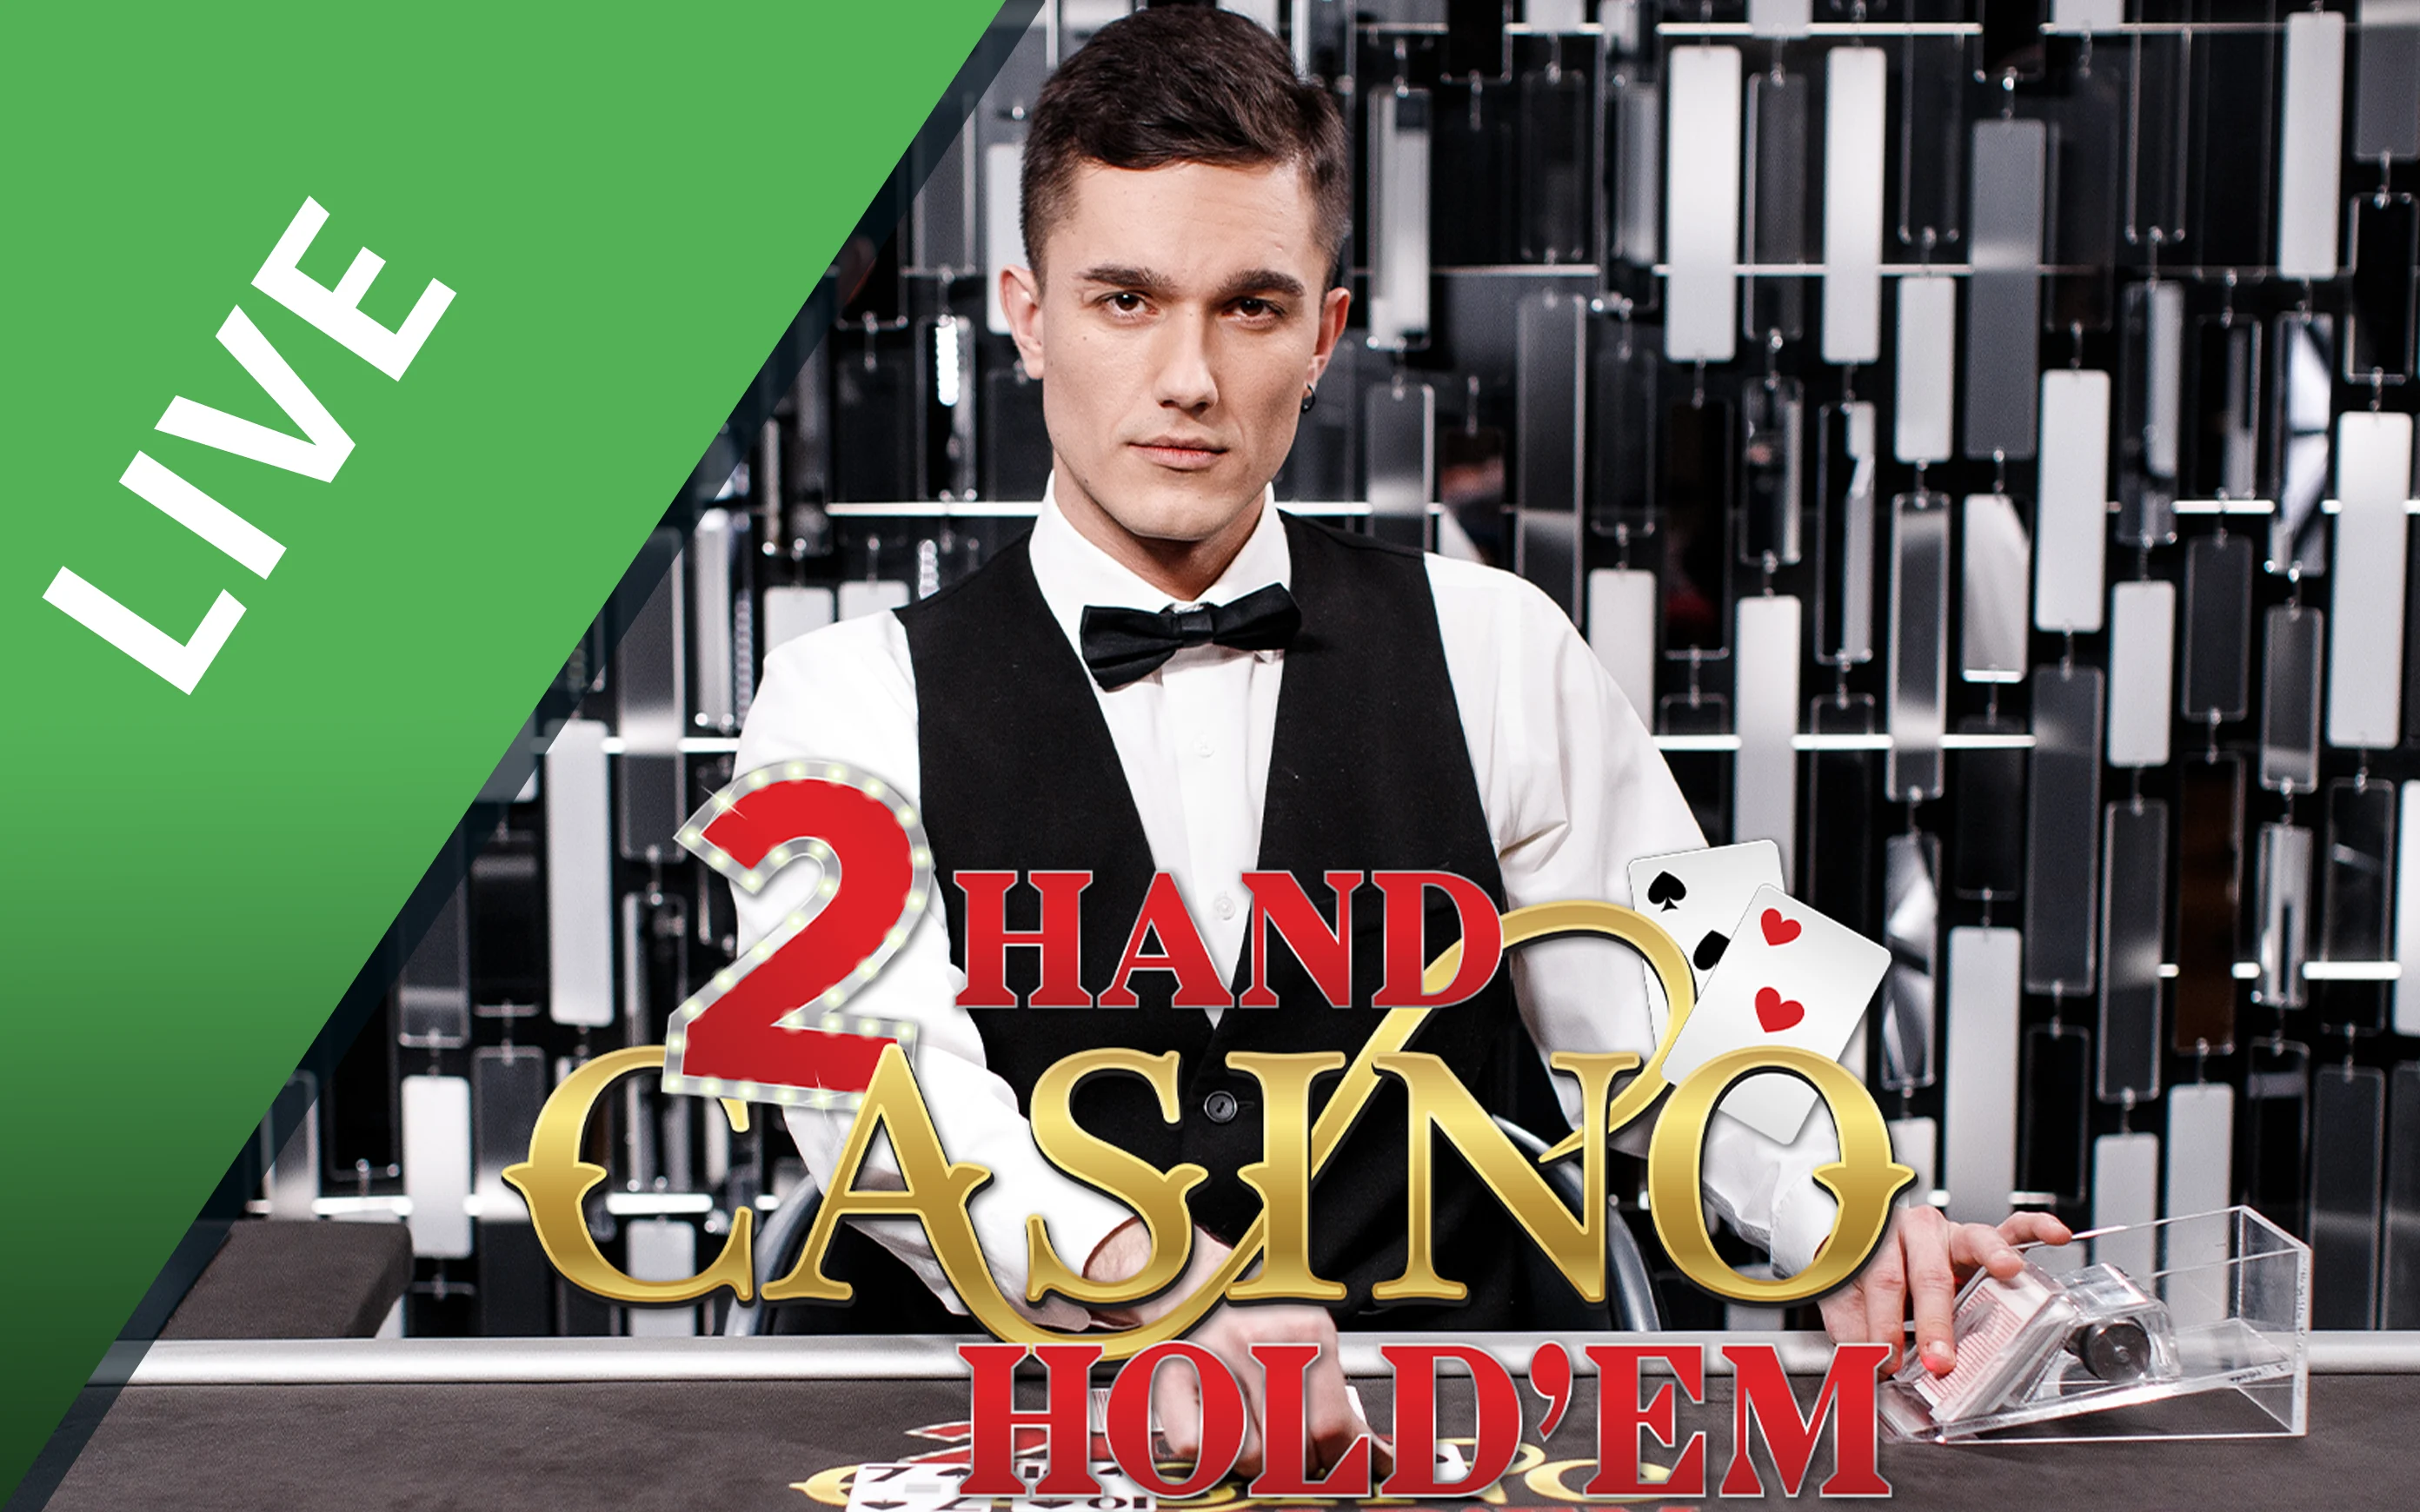 Gioca a Double Hand Casino Holdem sul casino online Starcasino.be